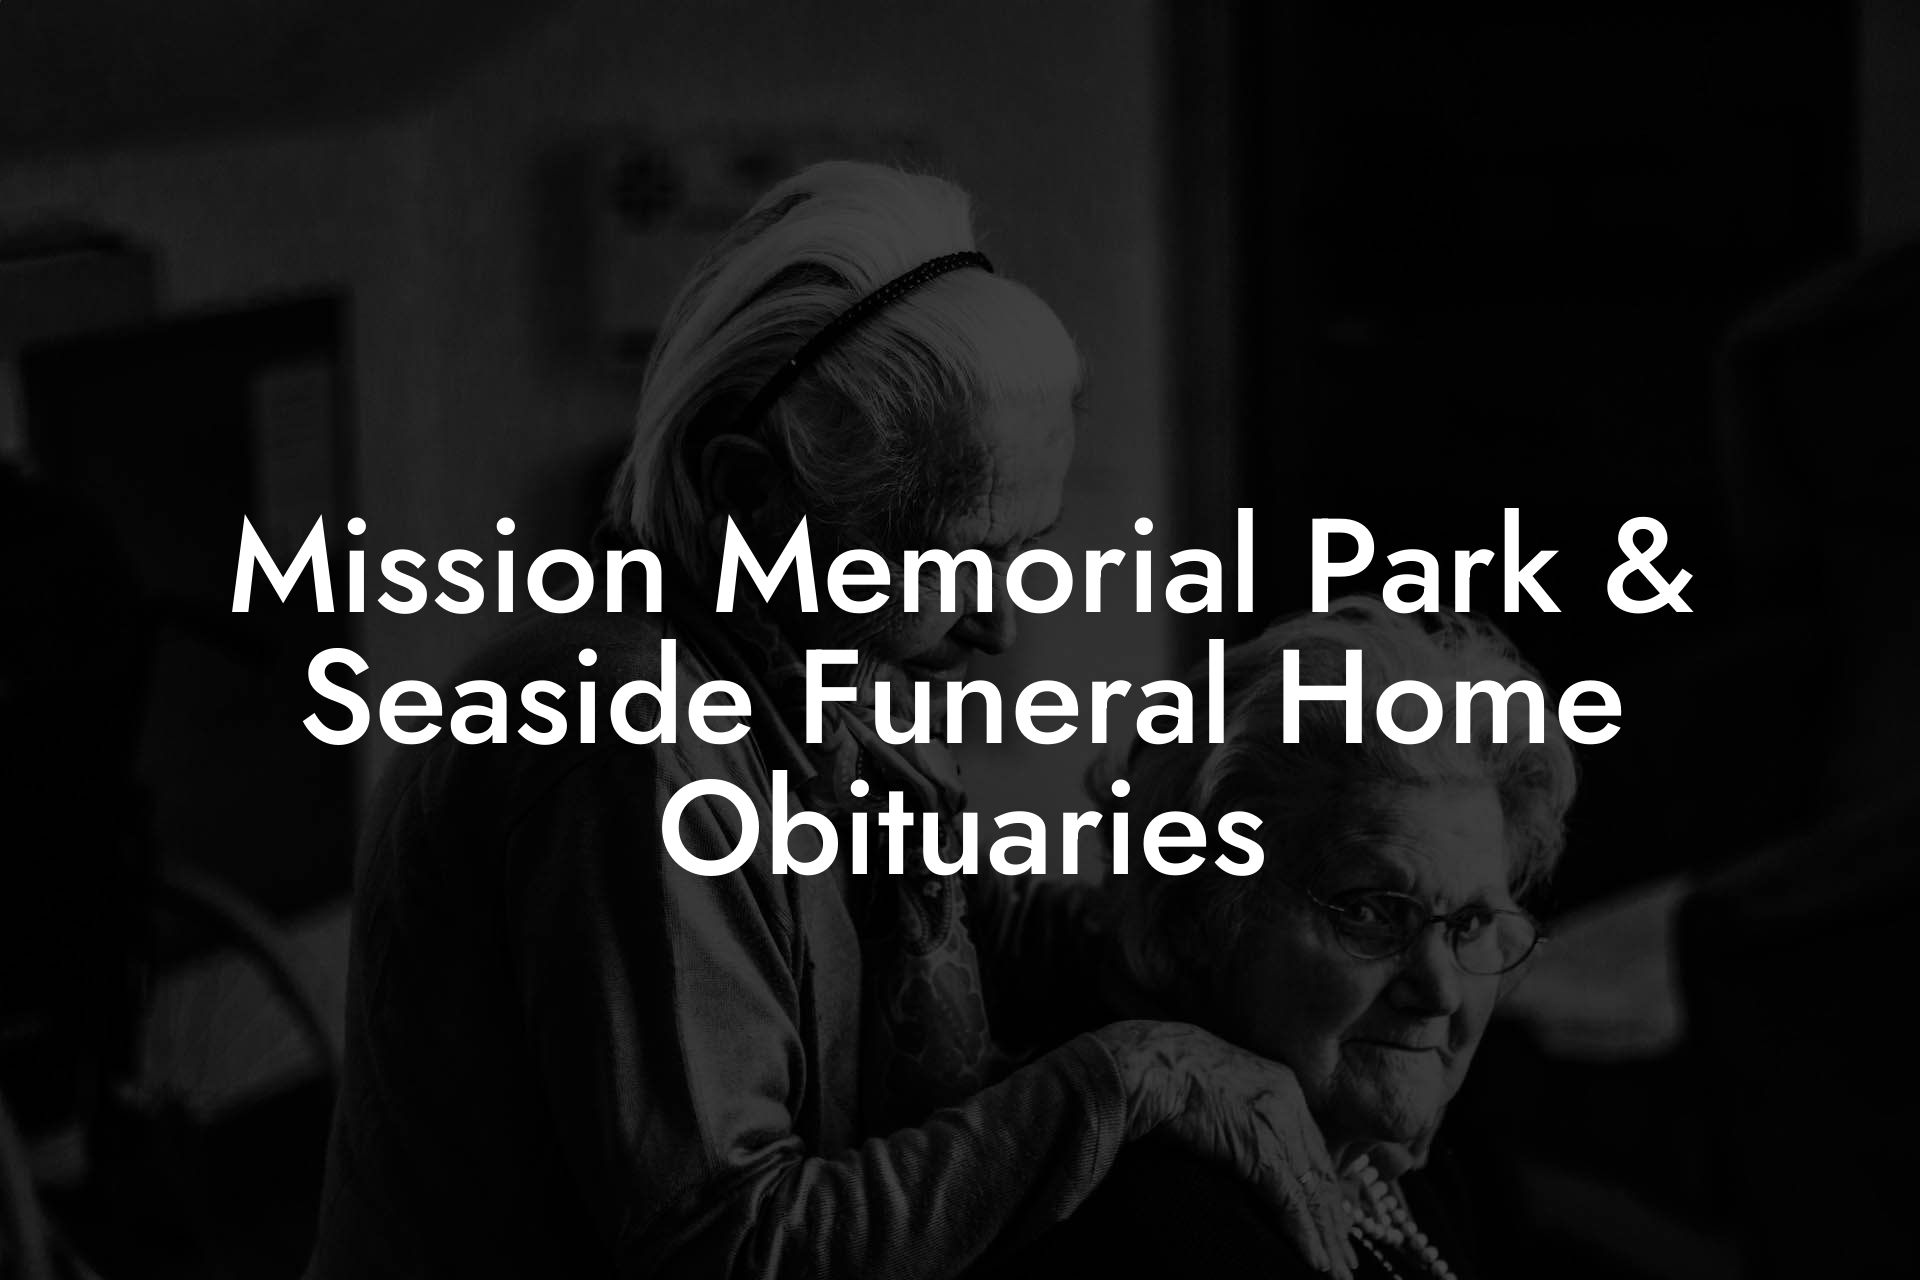 Mission Memorial Park & Seaside Funeral Home Obituaries